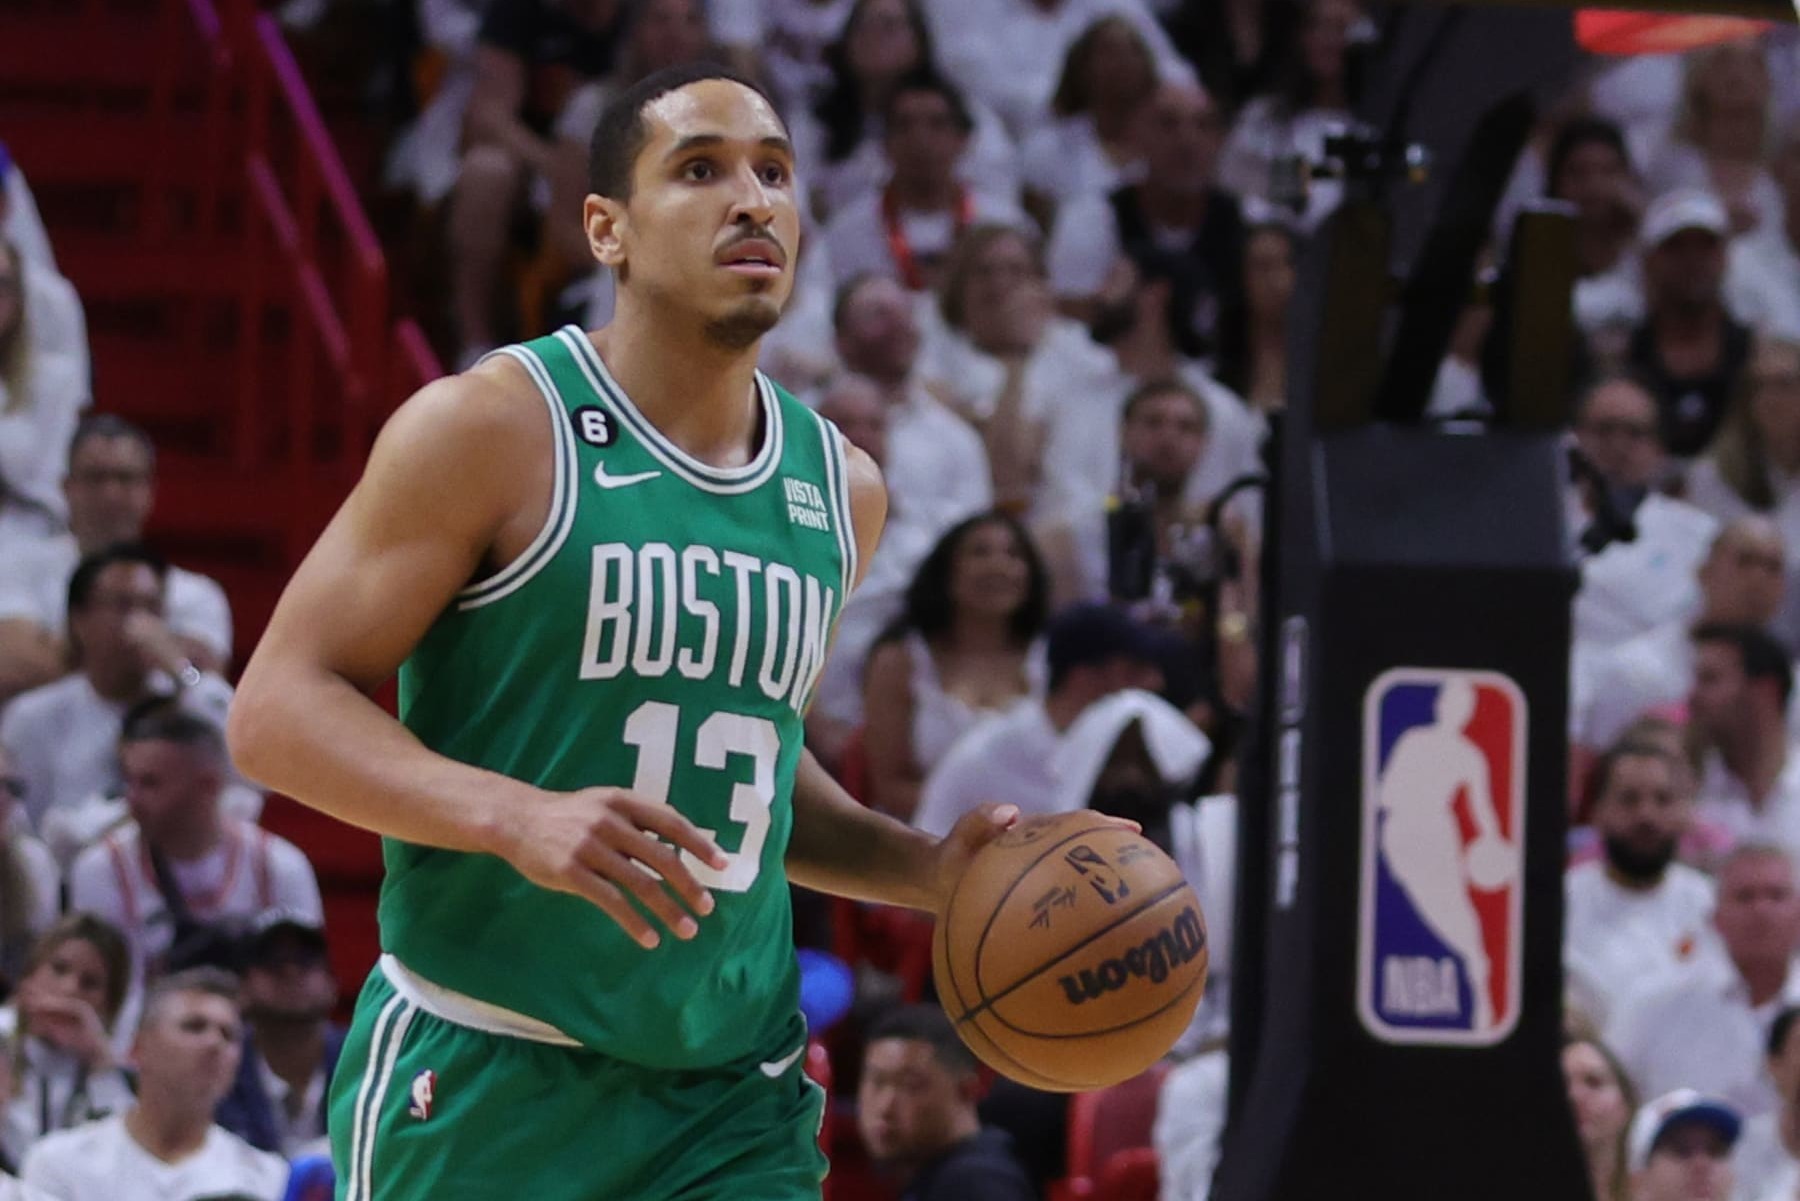 Processing Celtics' Marcus Smart-less future after stunning